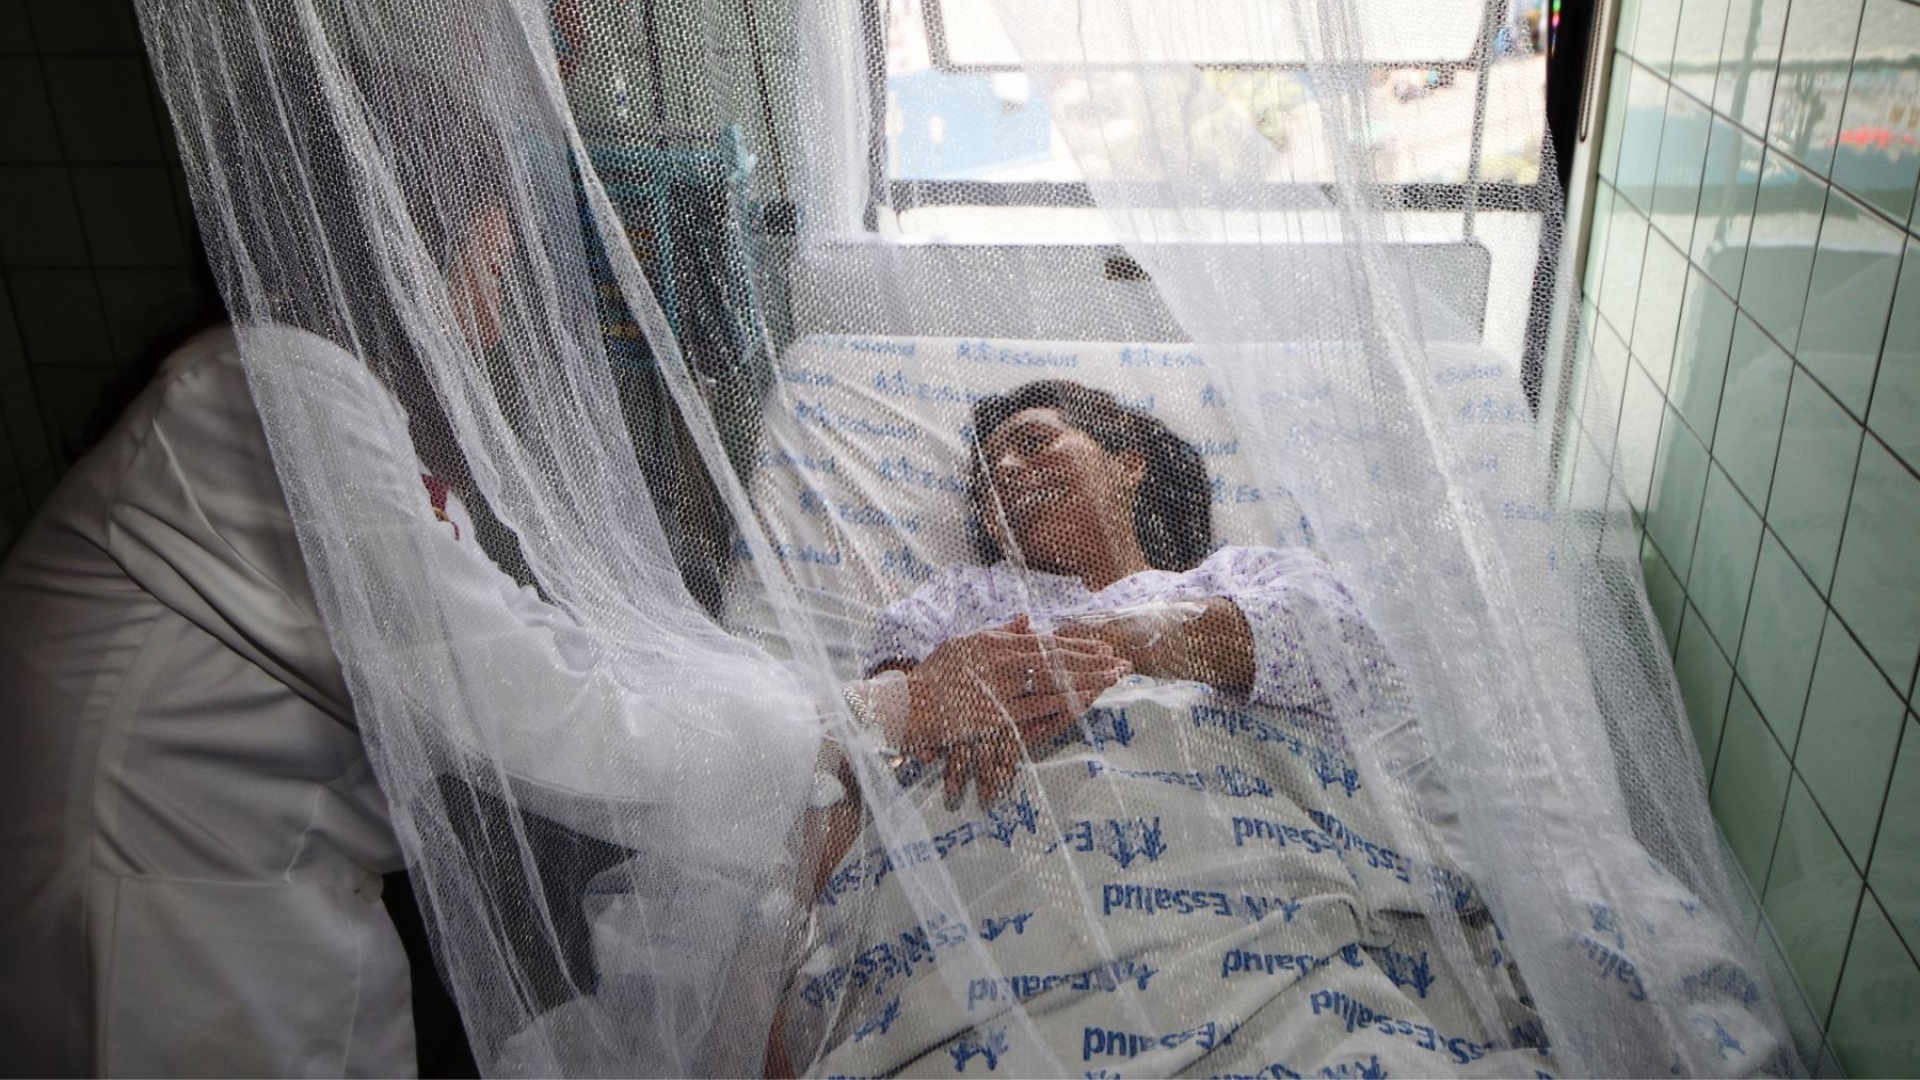 Ica declara alerta epidemiológica por aumento de casos de dengue. (Andina)